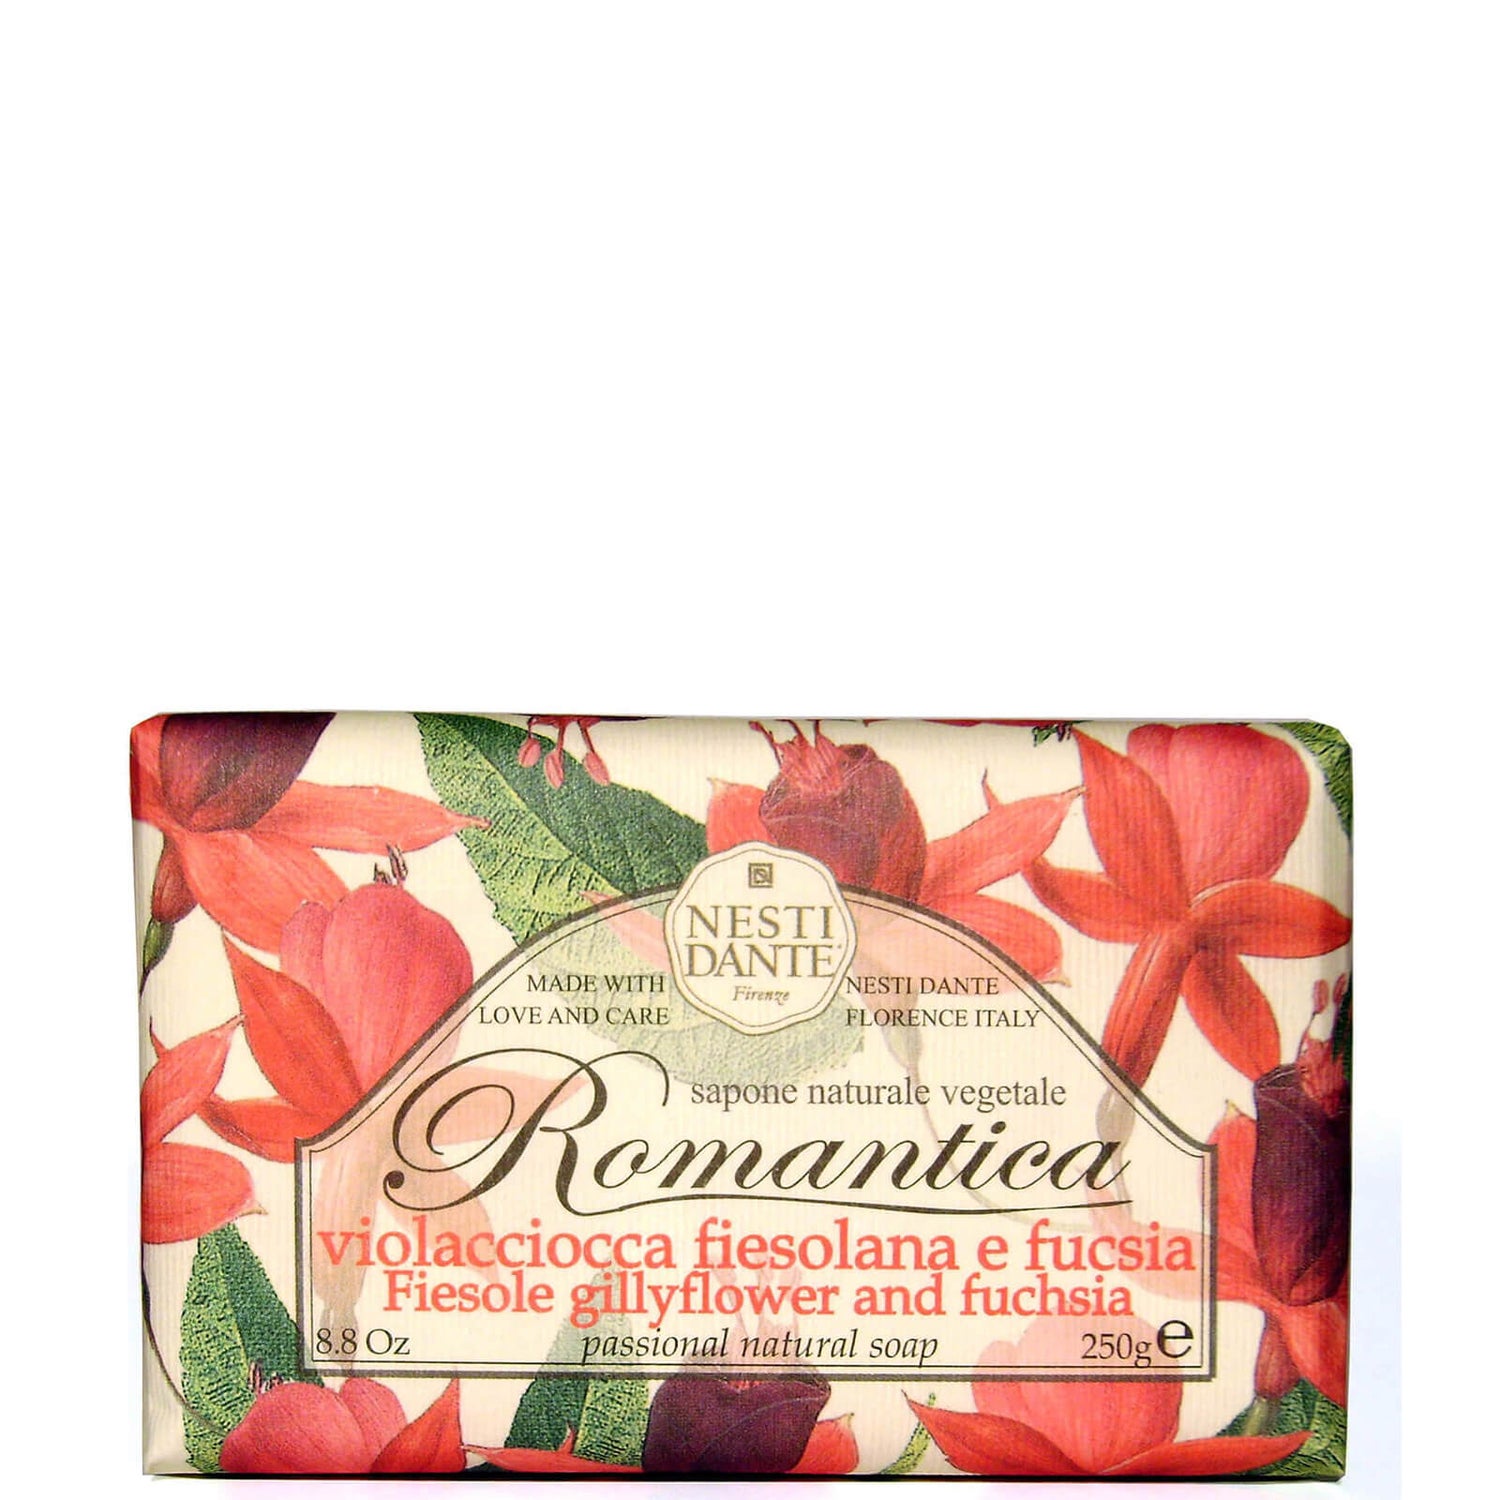 Nesti Dante 浪漫系列香氛手工皂 250g | 康乃馨和灯笼海棠